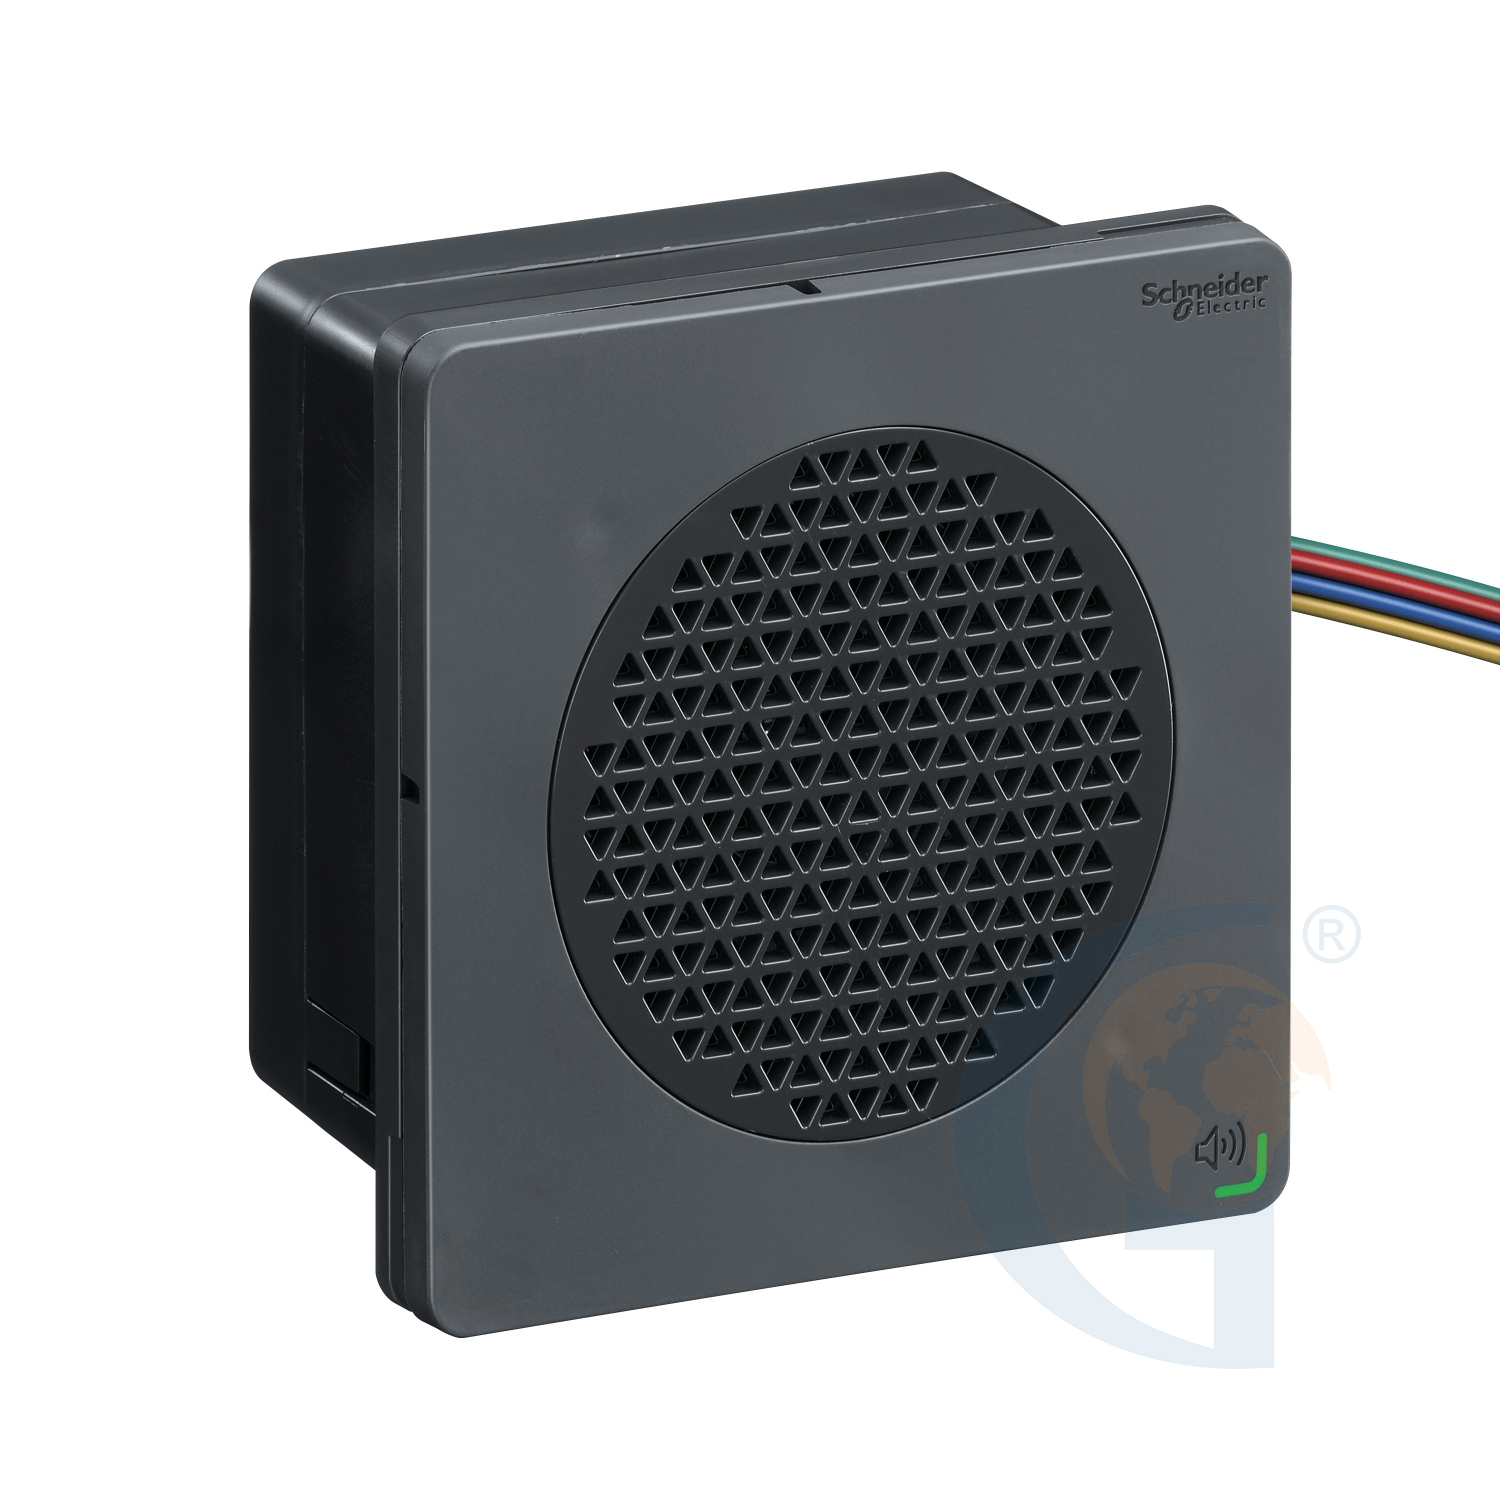 Schneider Electric XVSV9MBN Editable voice alarm, black, NPN, mounting support DIN 96, 100…230 V AC https://gesrepair.com/wp-content/uploads/2020/Schneider/Schneider_Electric_XVSV9MBN_.jpg